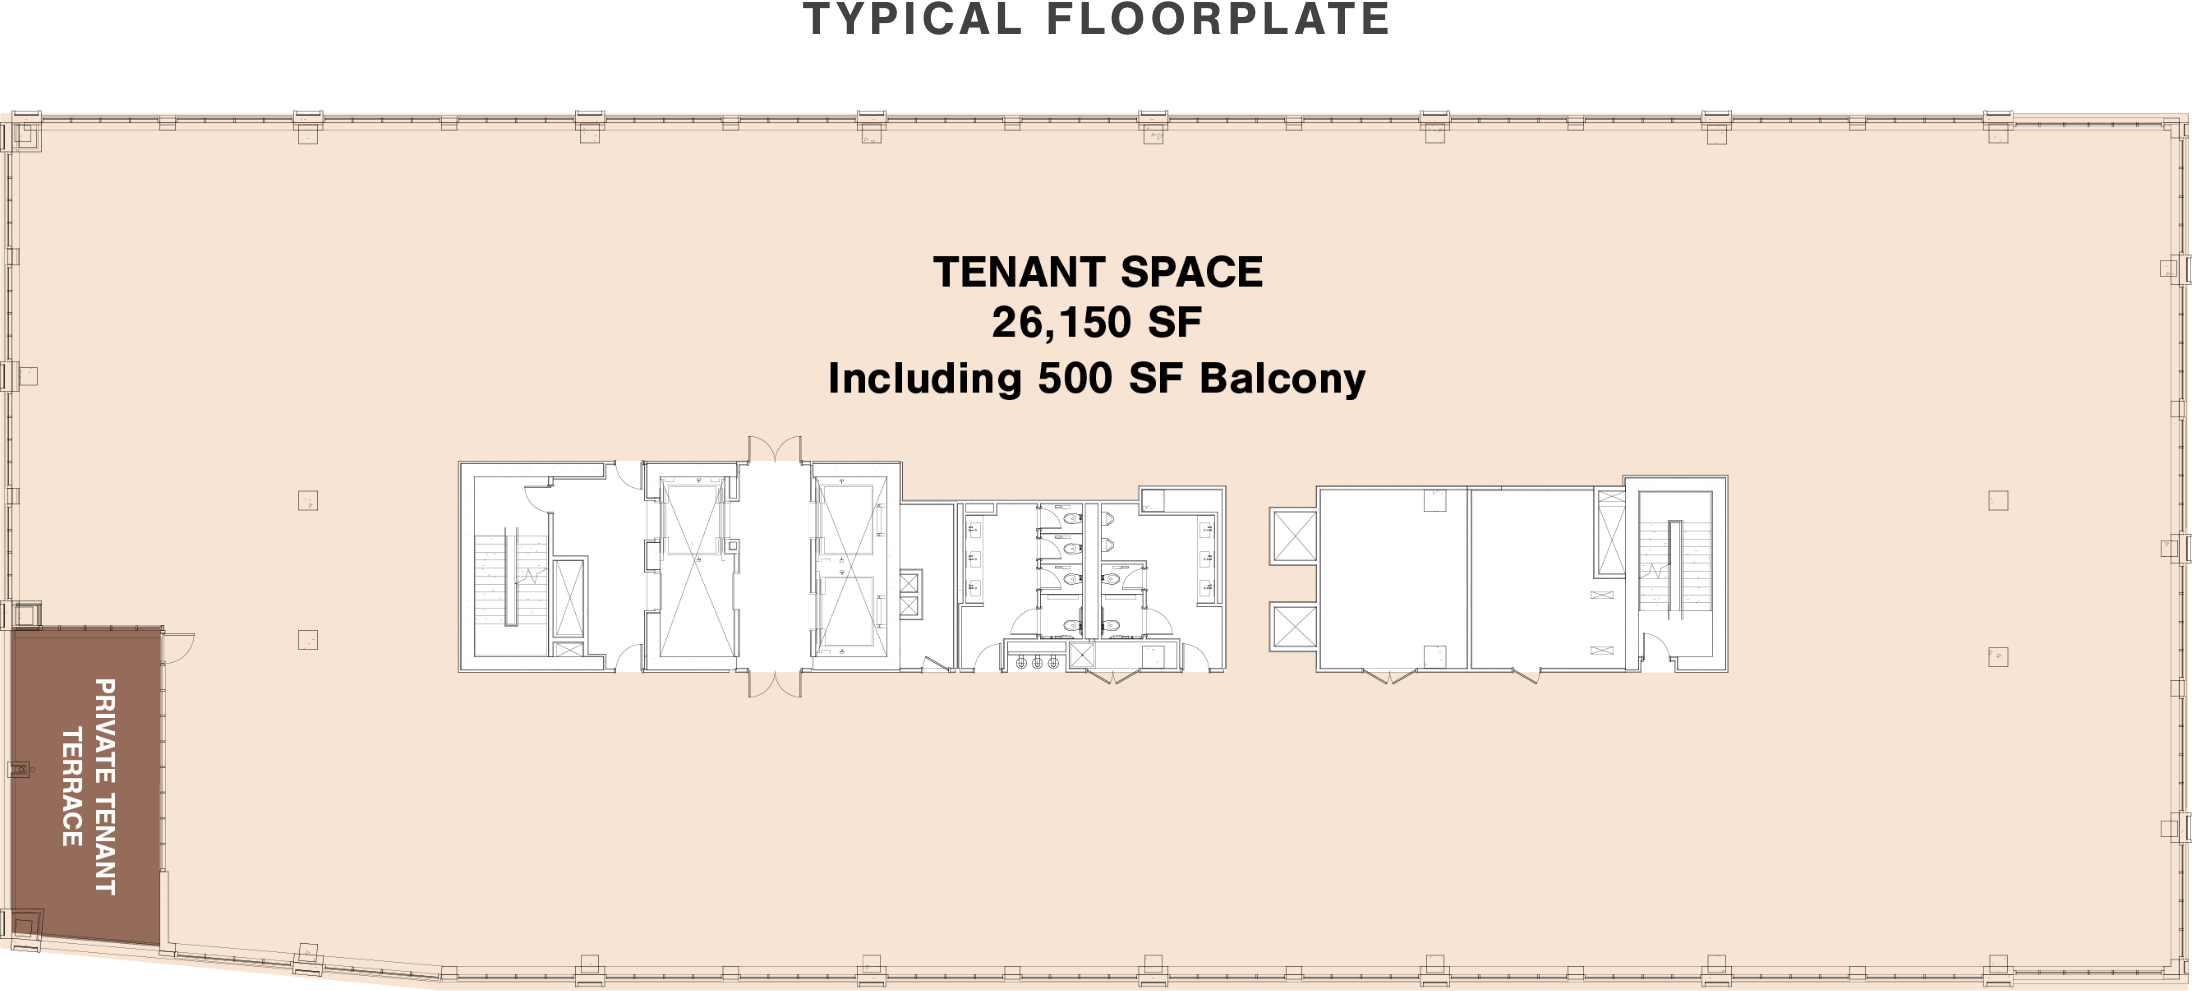 Typical Floorplate